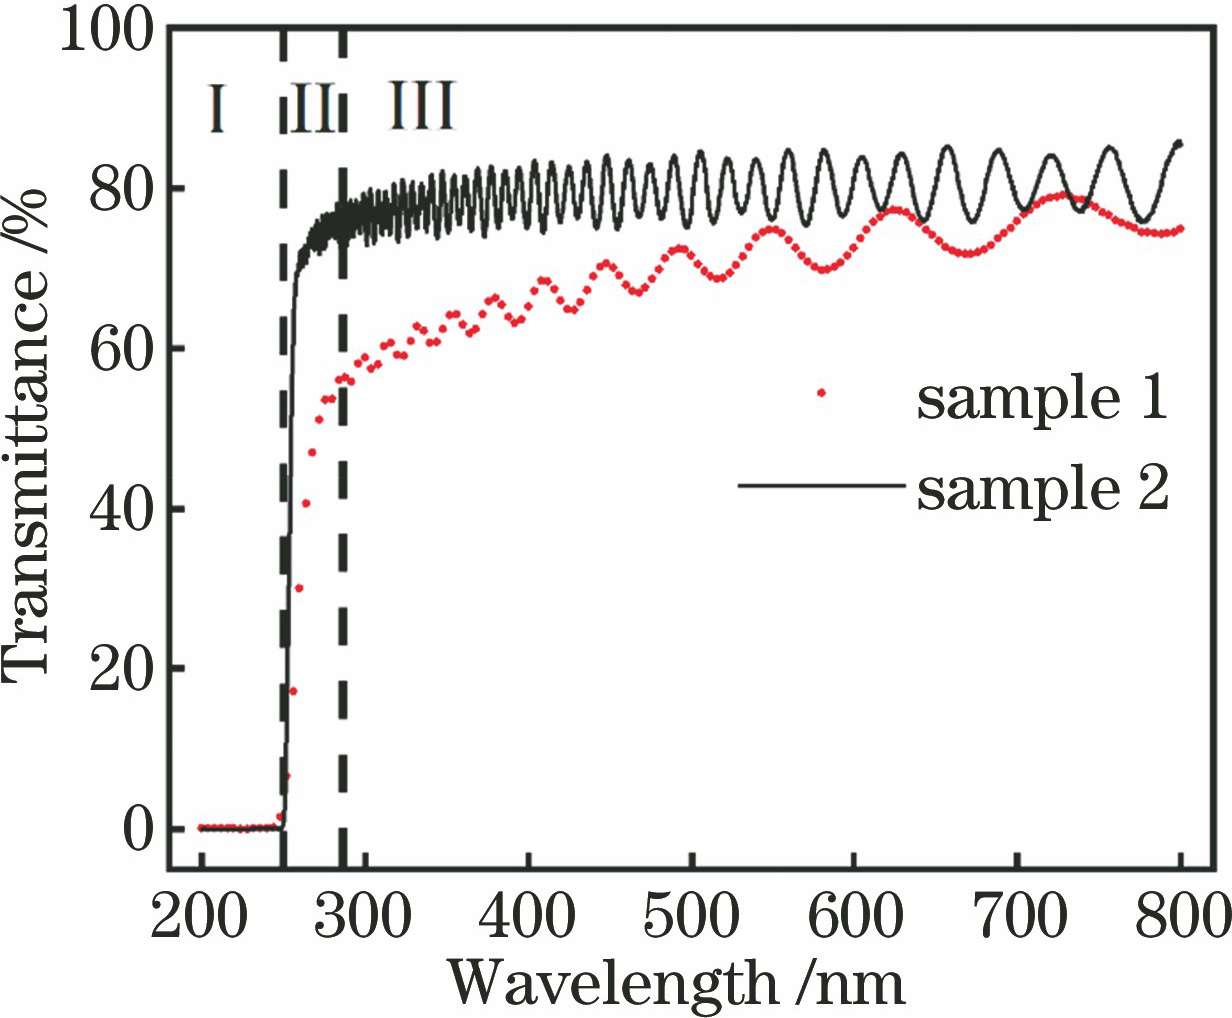 Measured transmission spectra of the samples